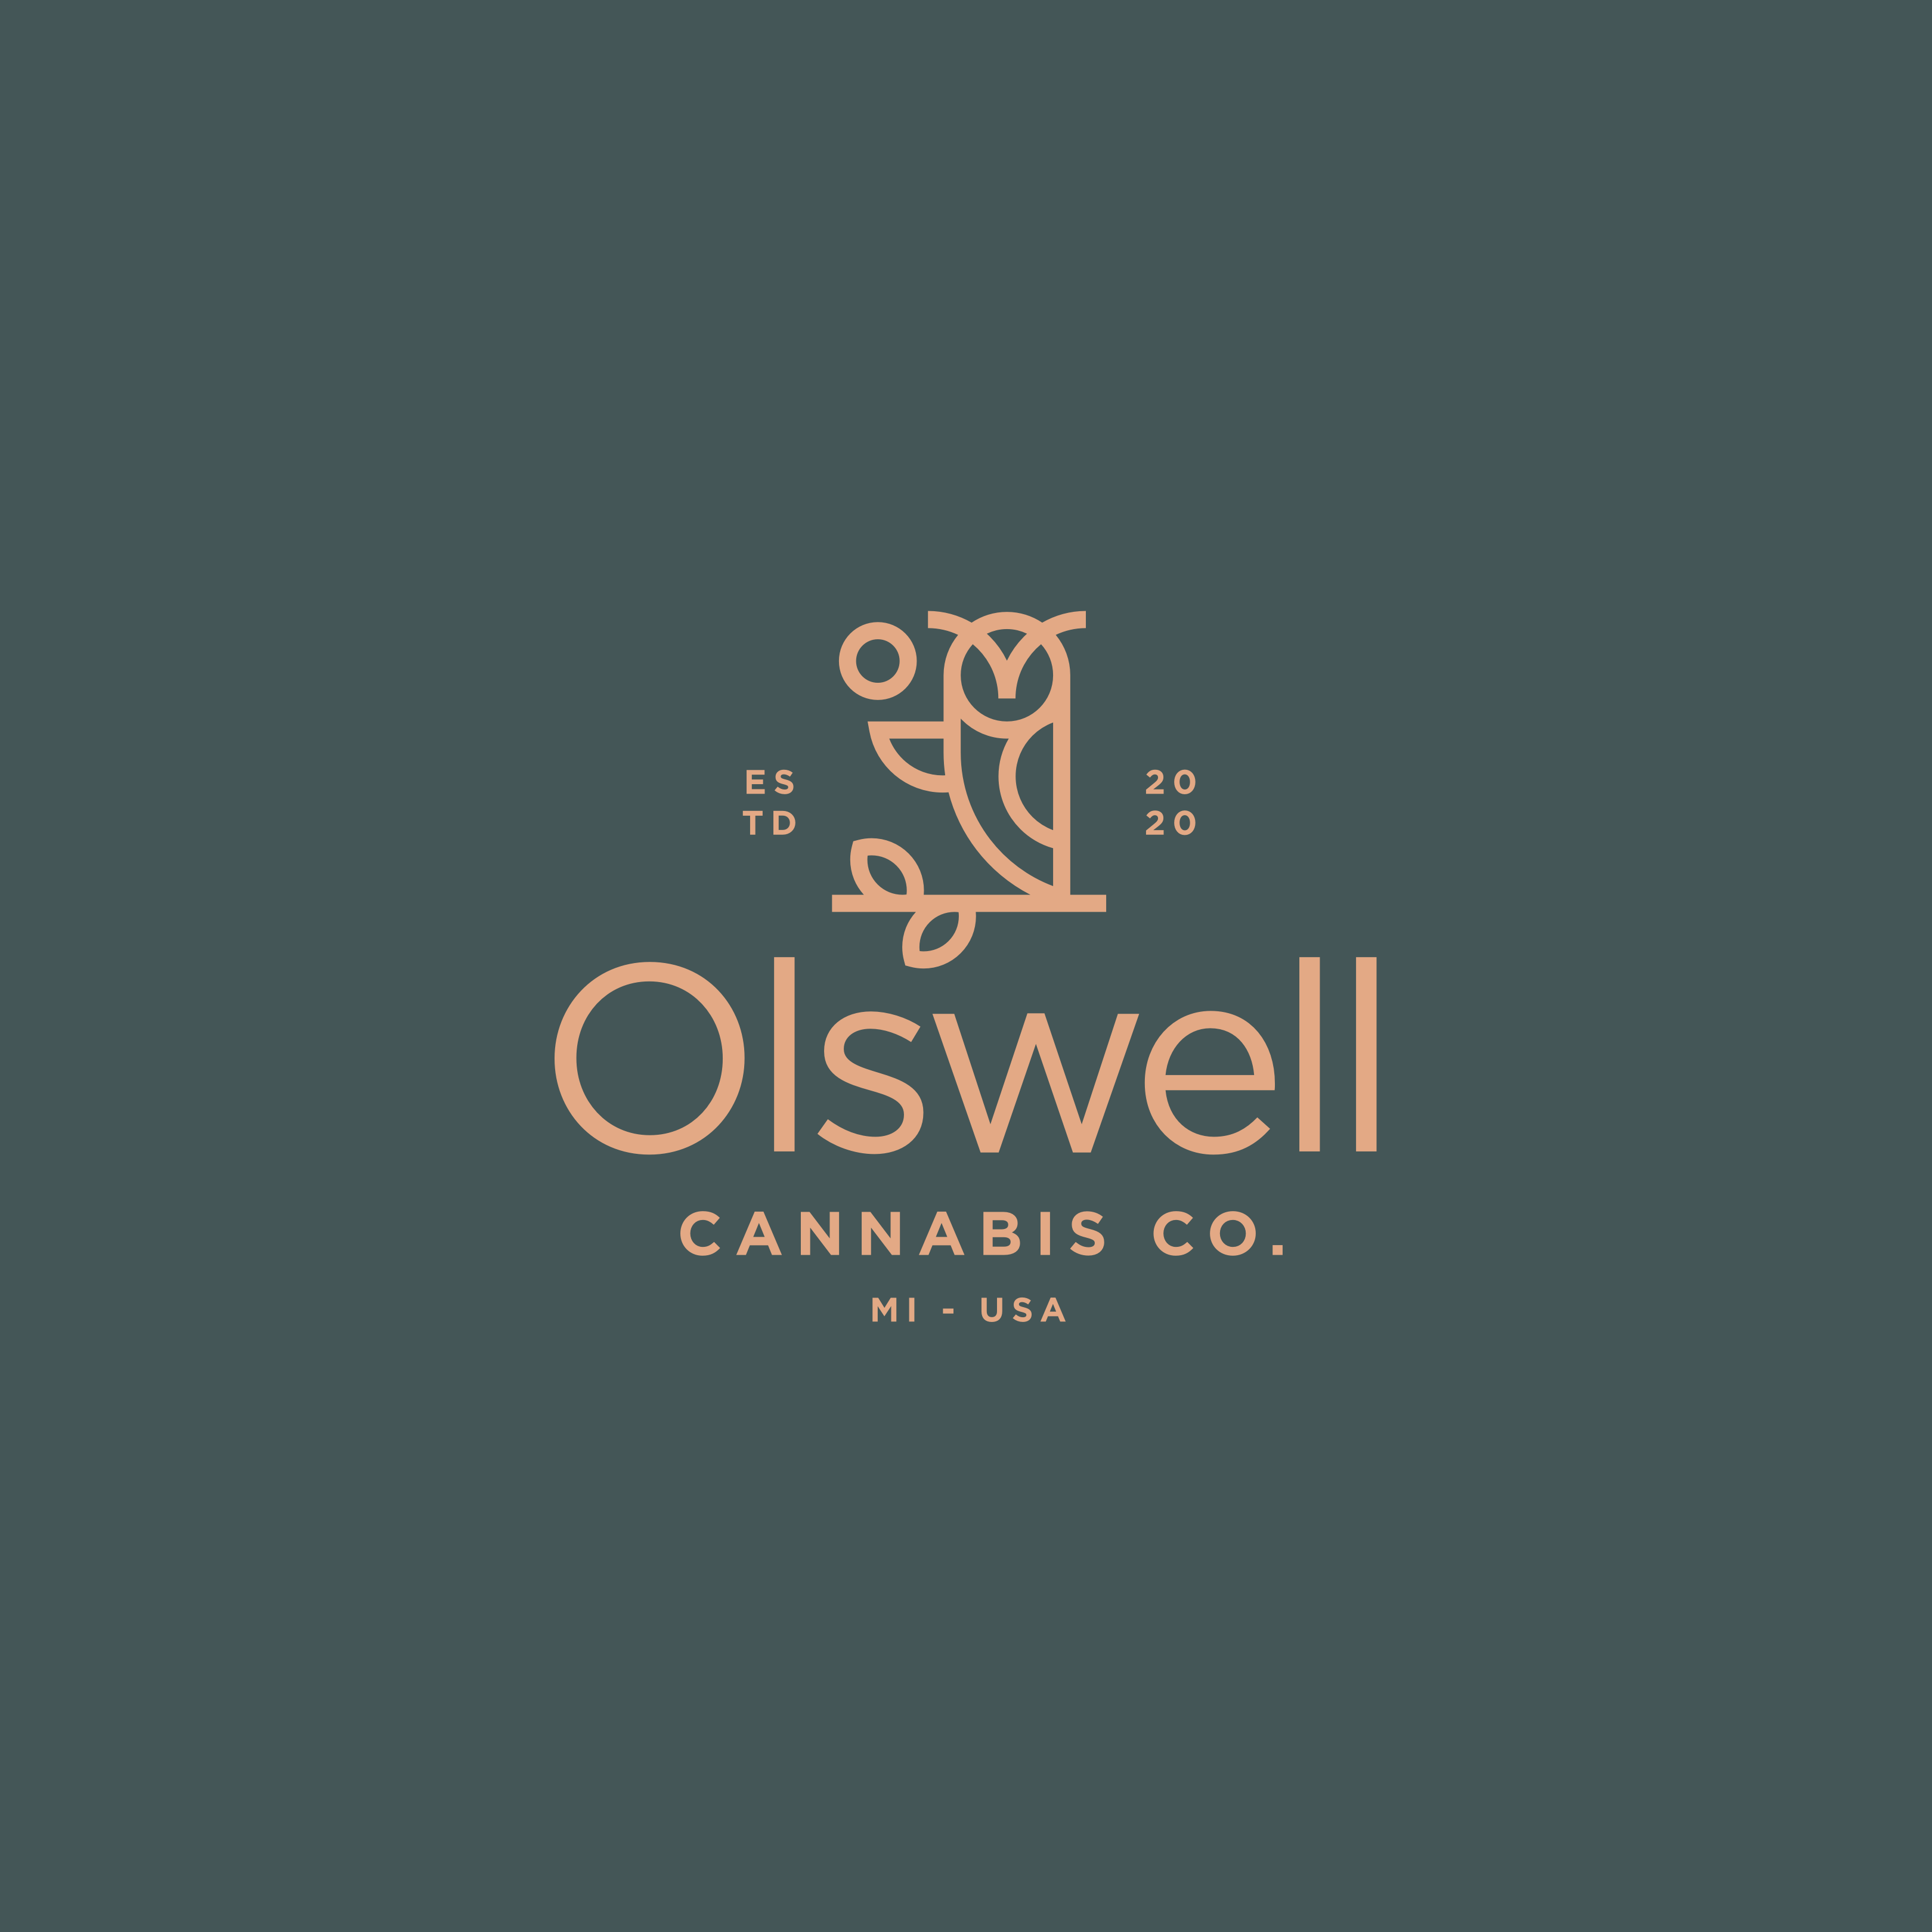 Olswell Cannabis Co.